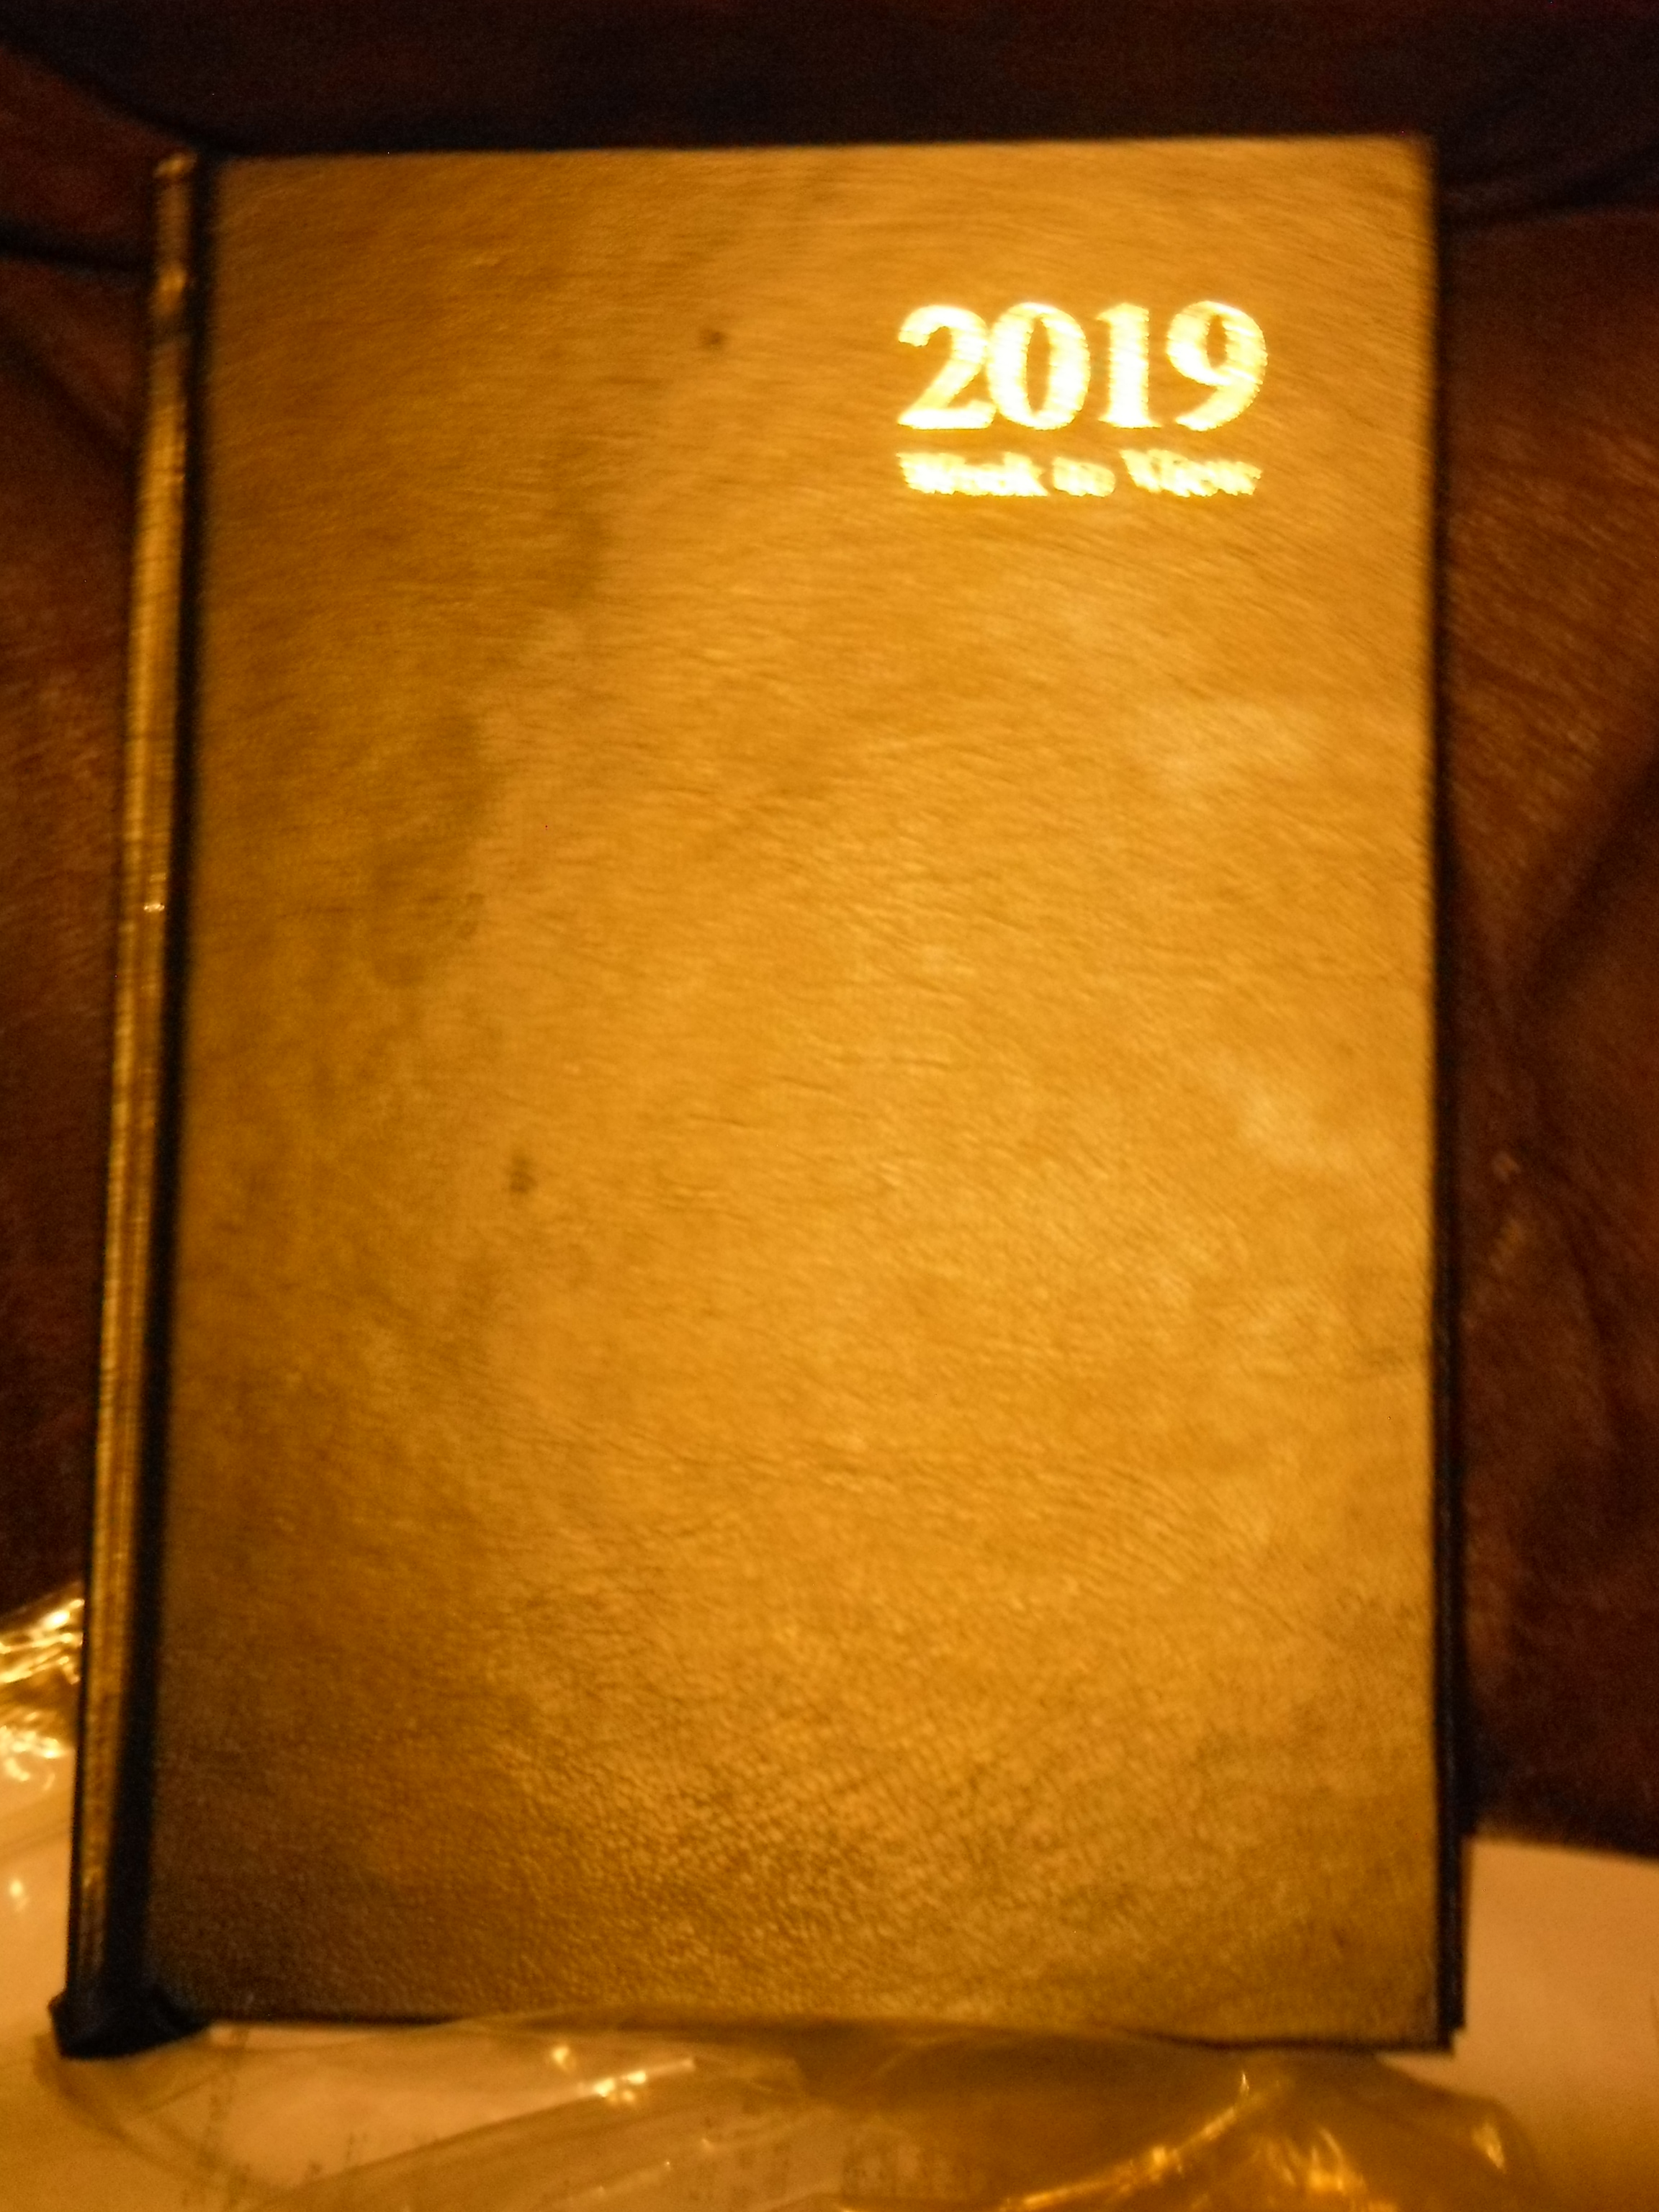 photo taken by me - my 2019 diary 